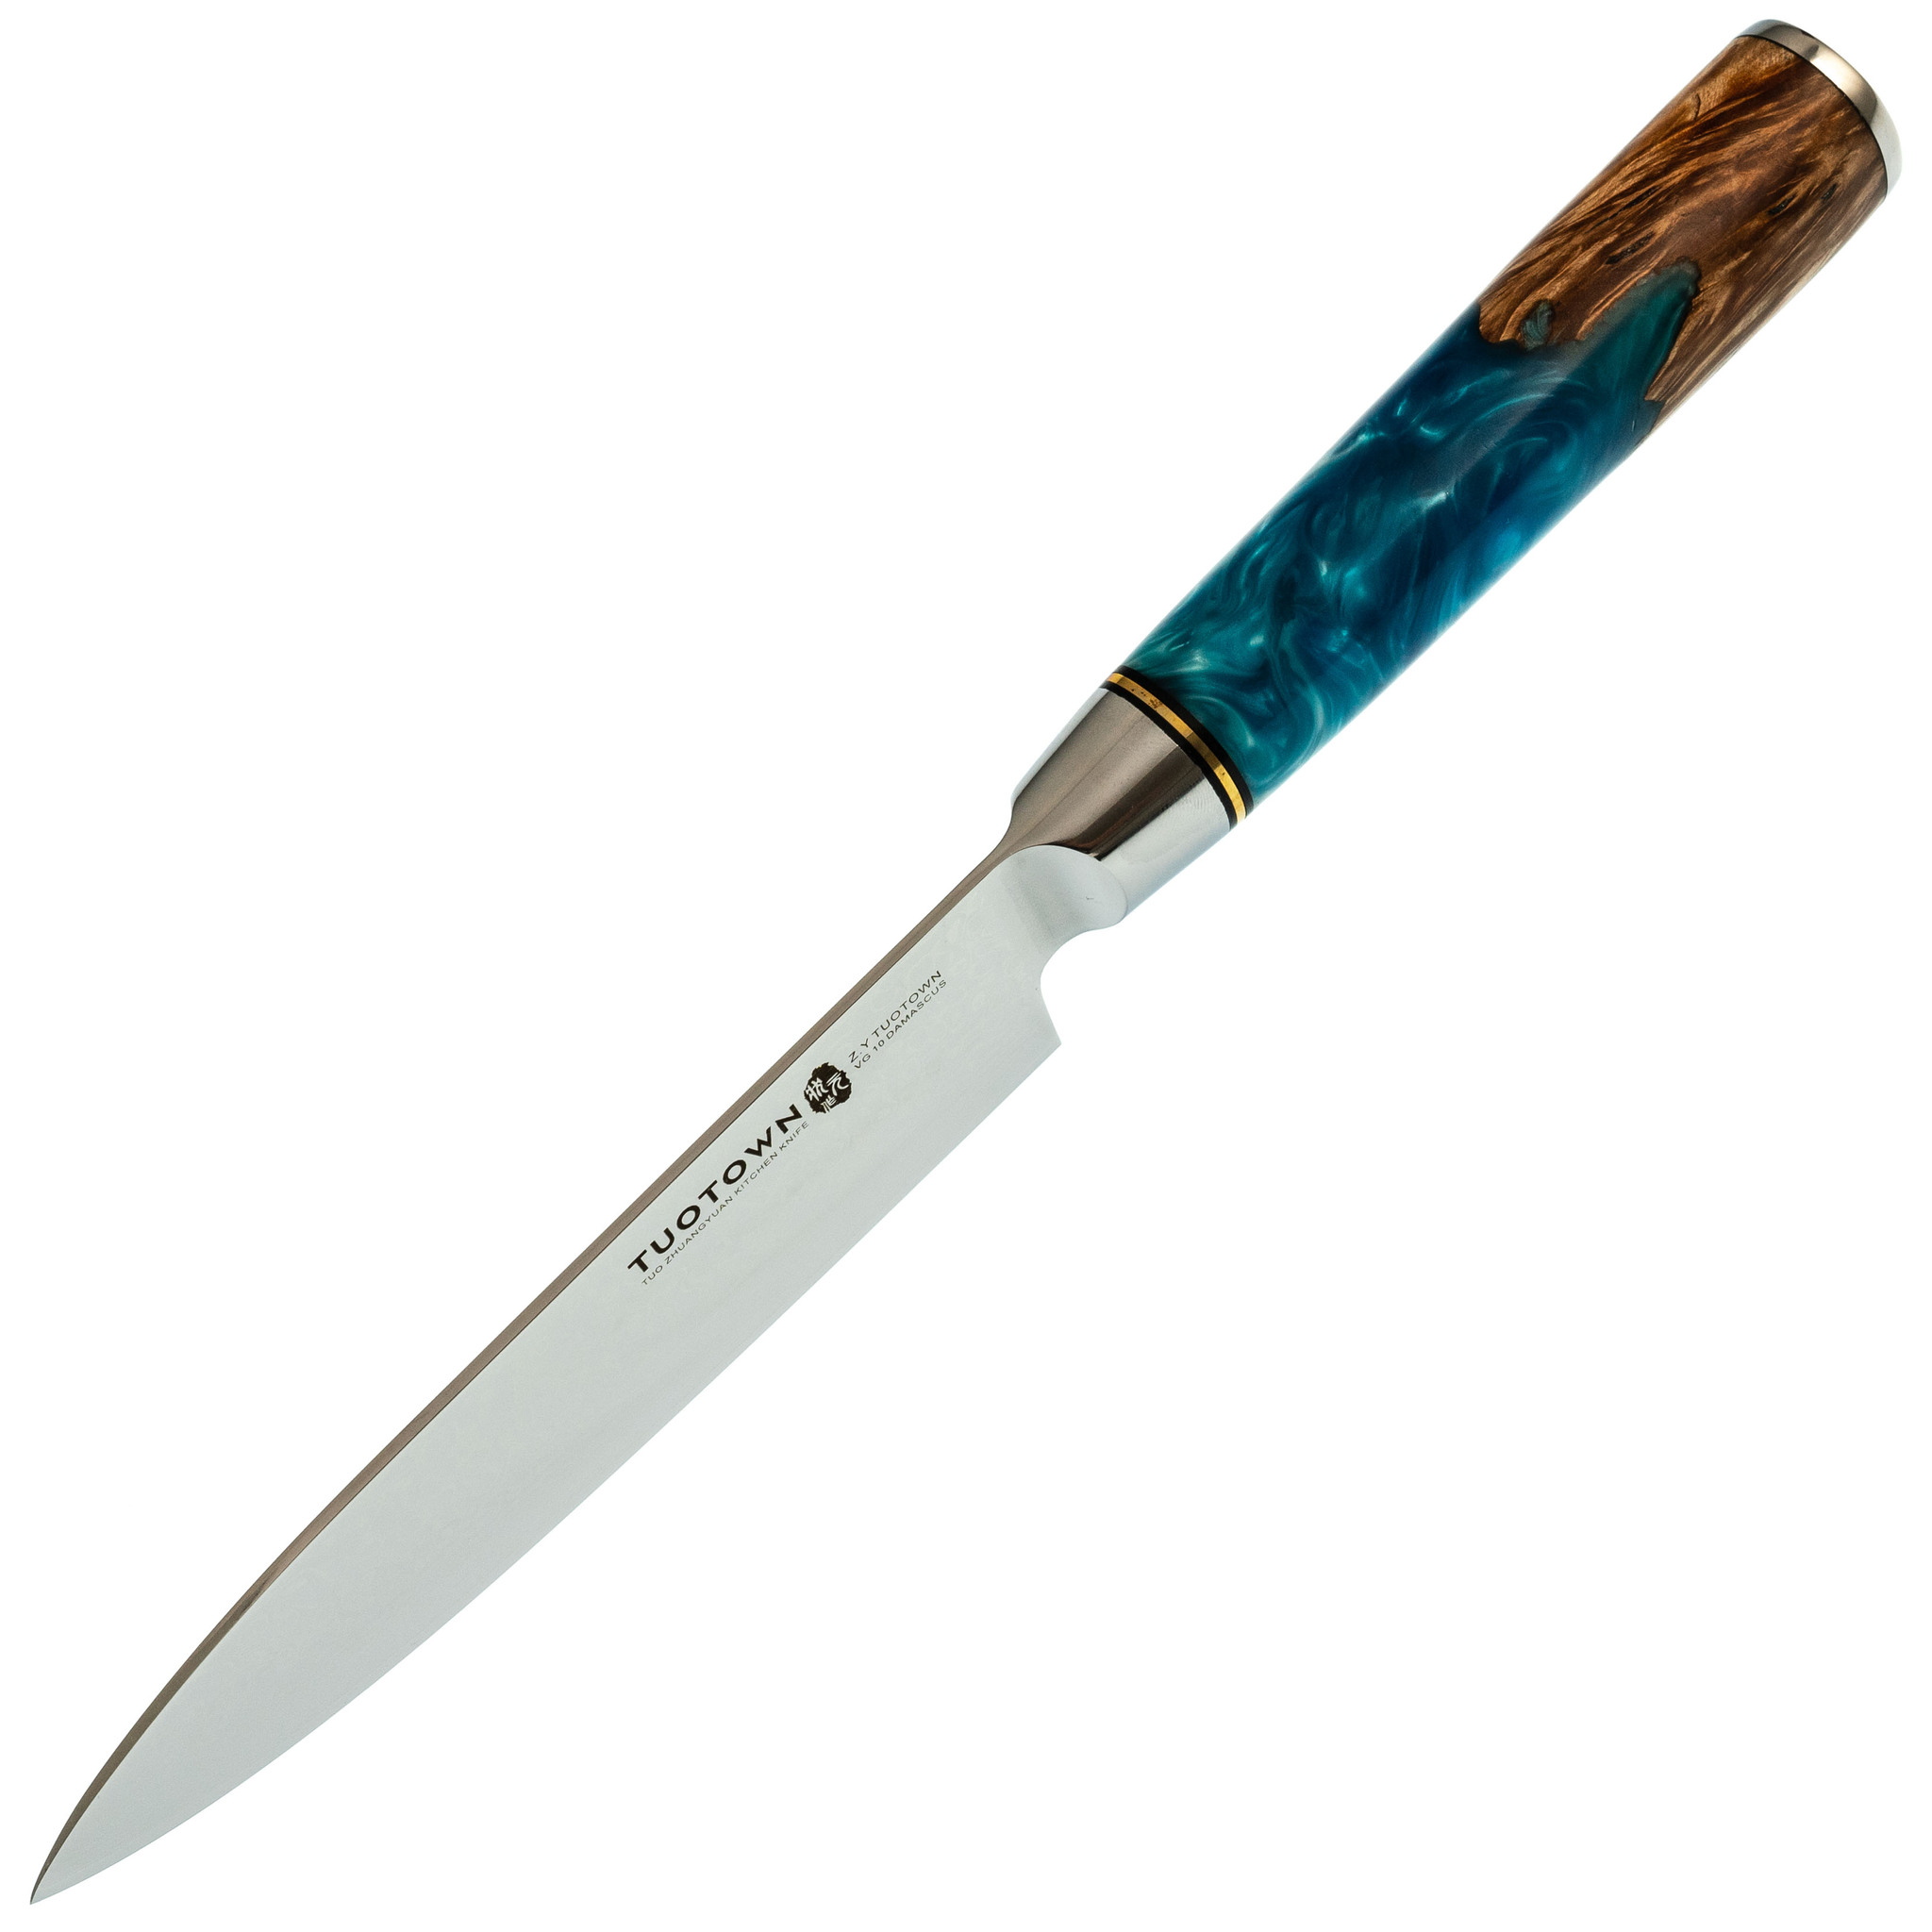 Нож кухонный Tuotown DM003, сталь VG-10, рукоять дерево/эпоксидка - фото 3